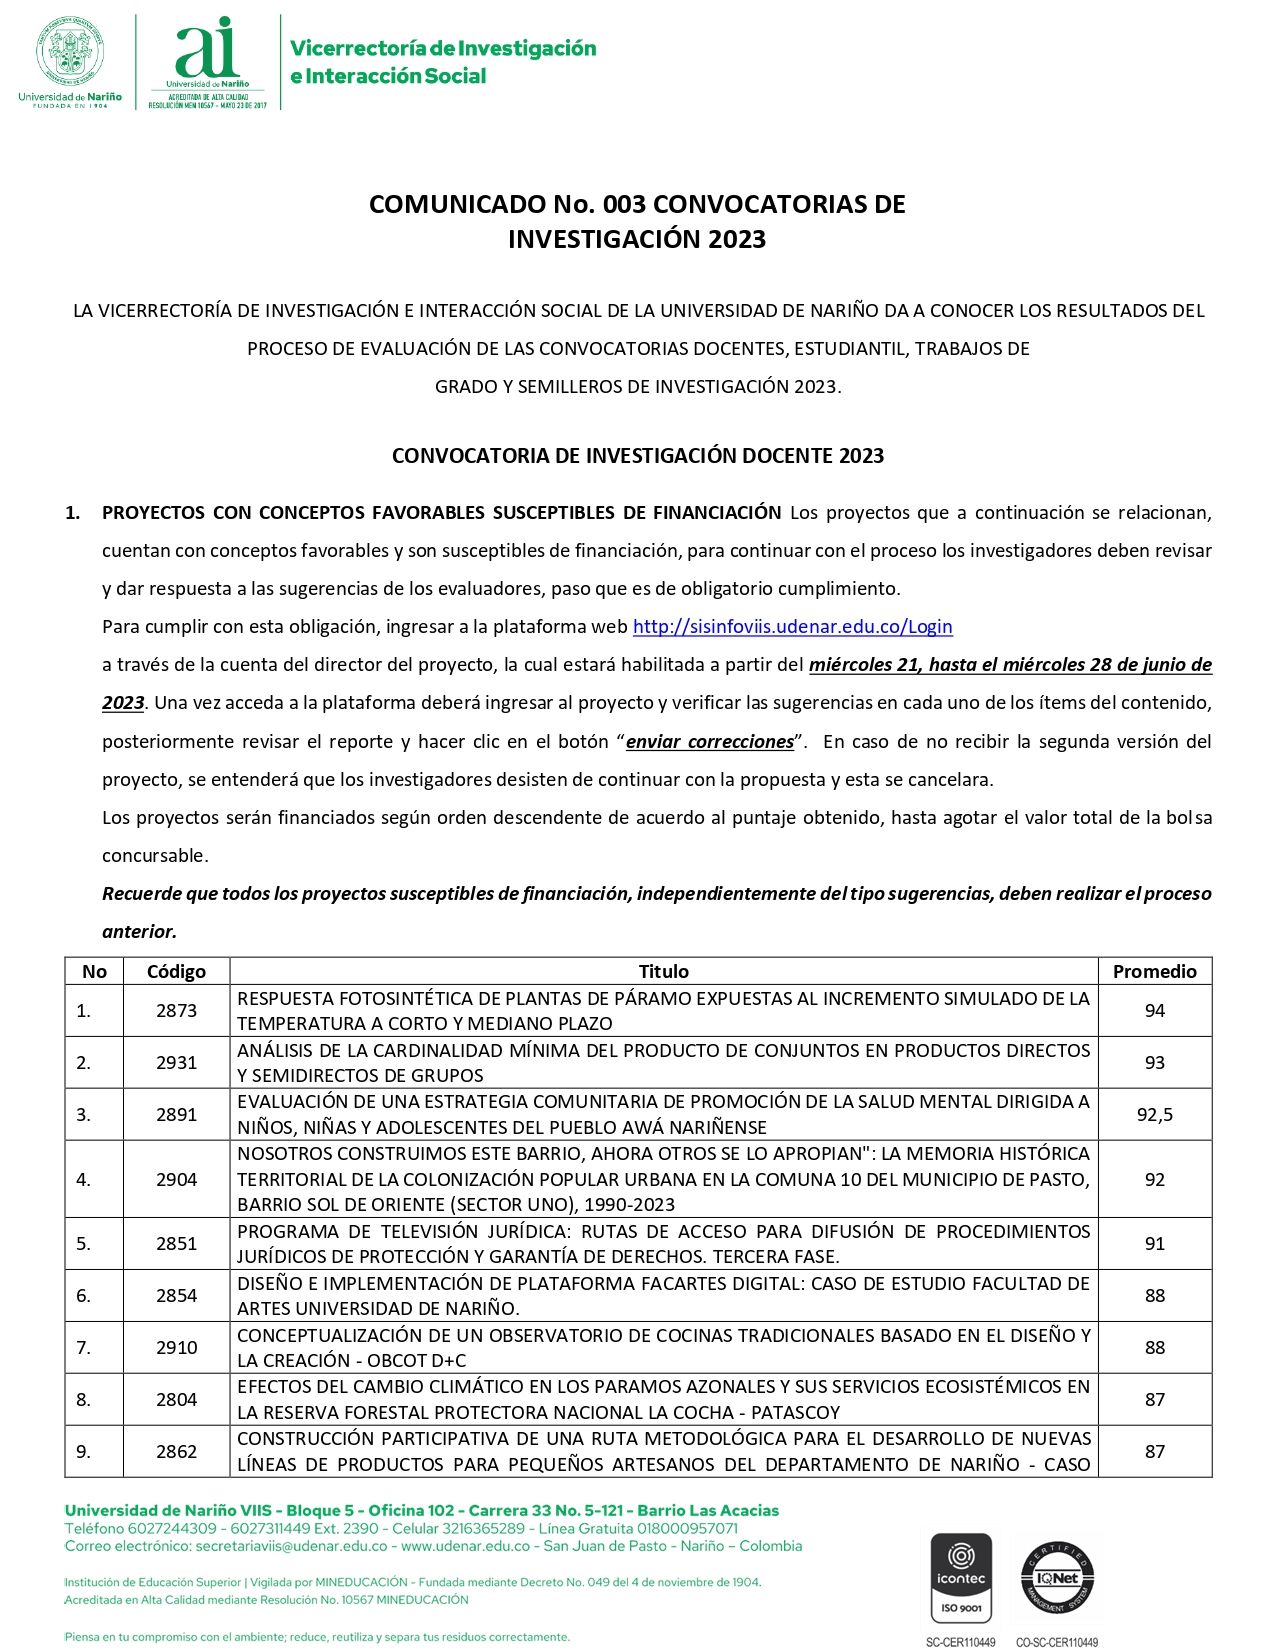 UDENAR-PERIODICO-COMUNICADO-003-CONVOCATORIAS-DE-INVESTIGACION-2_page-0001